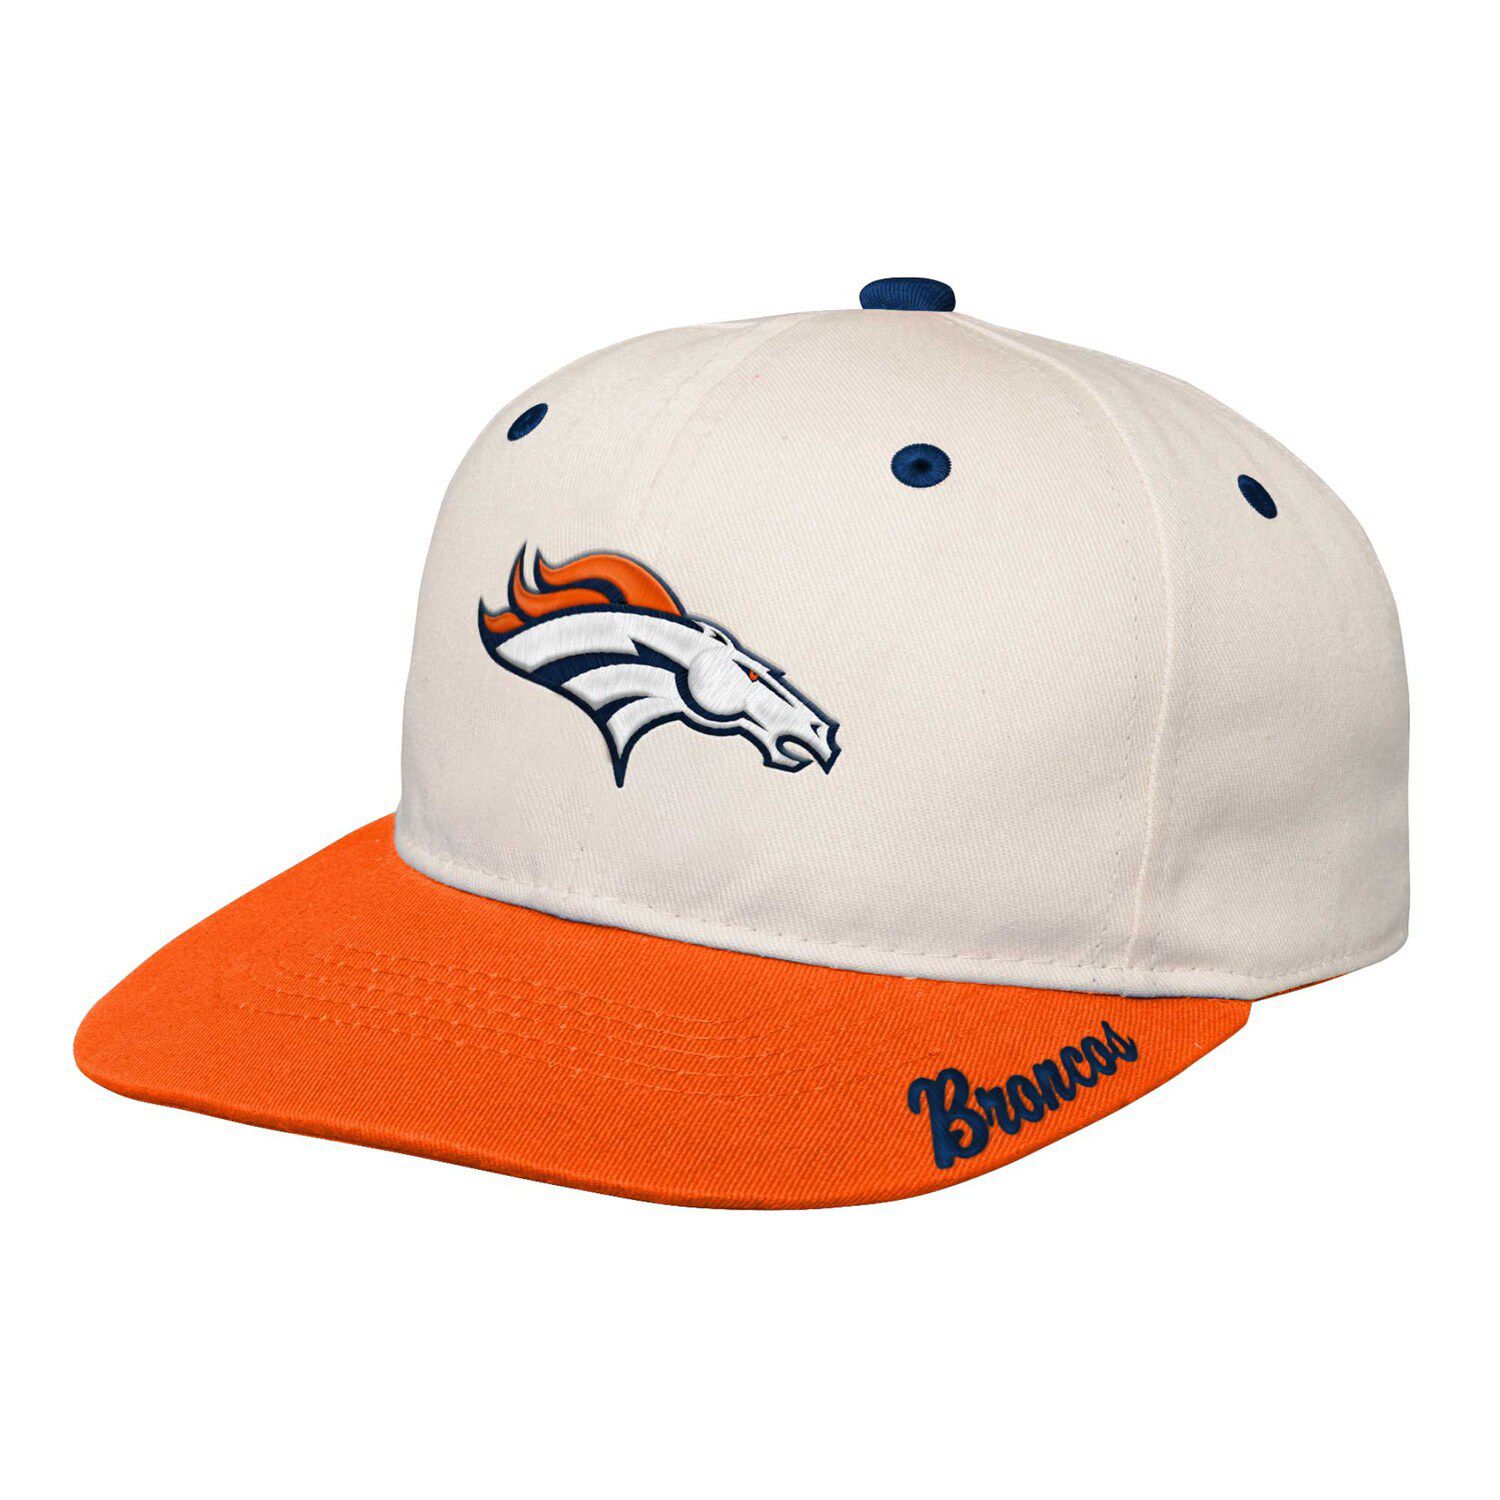 Denver Broncos New Era NFL x Staple Collection 9FIFTY Snapback